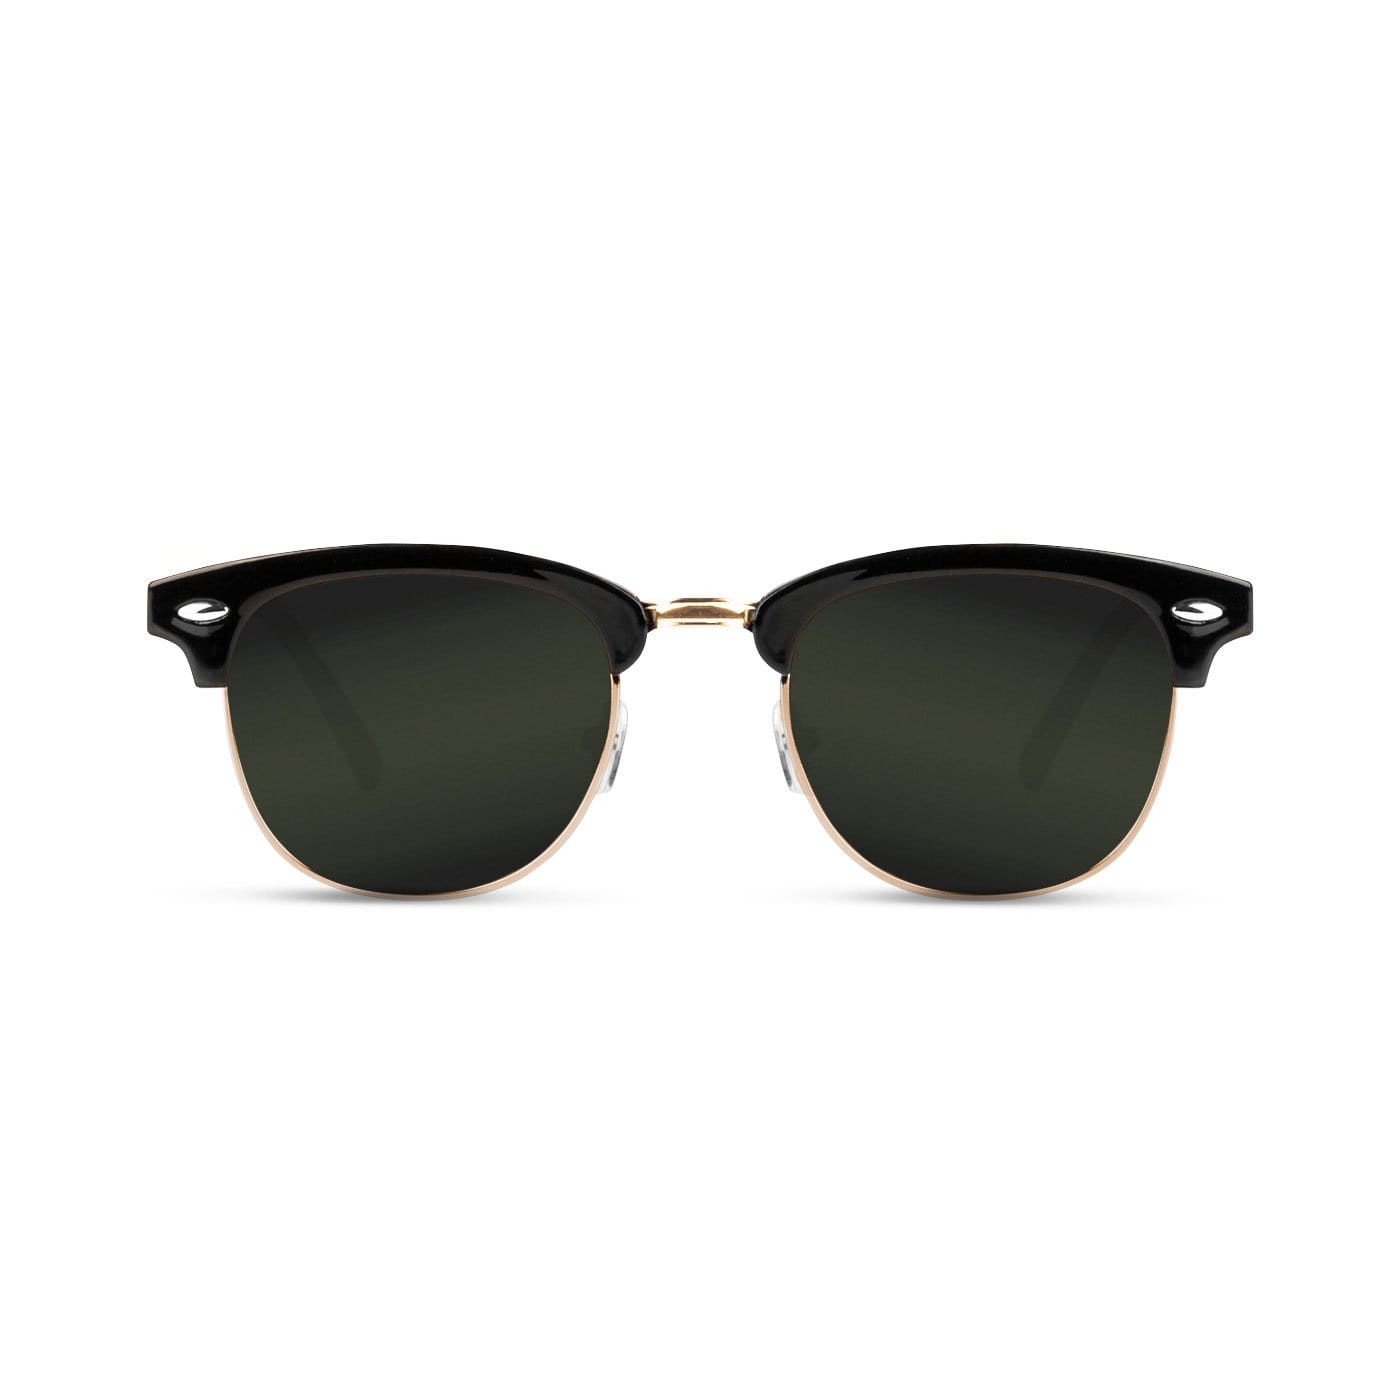 Malaca Shinny Black Gold / G15 Sunglasses